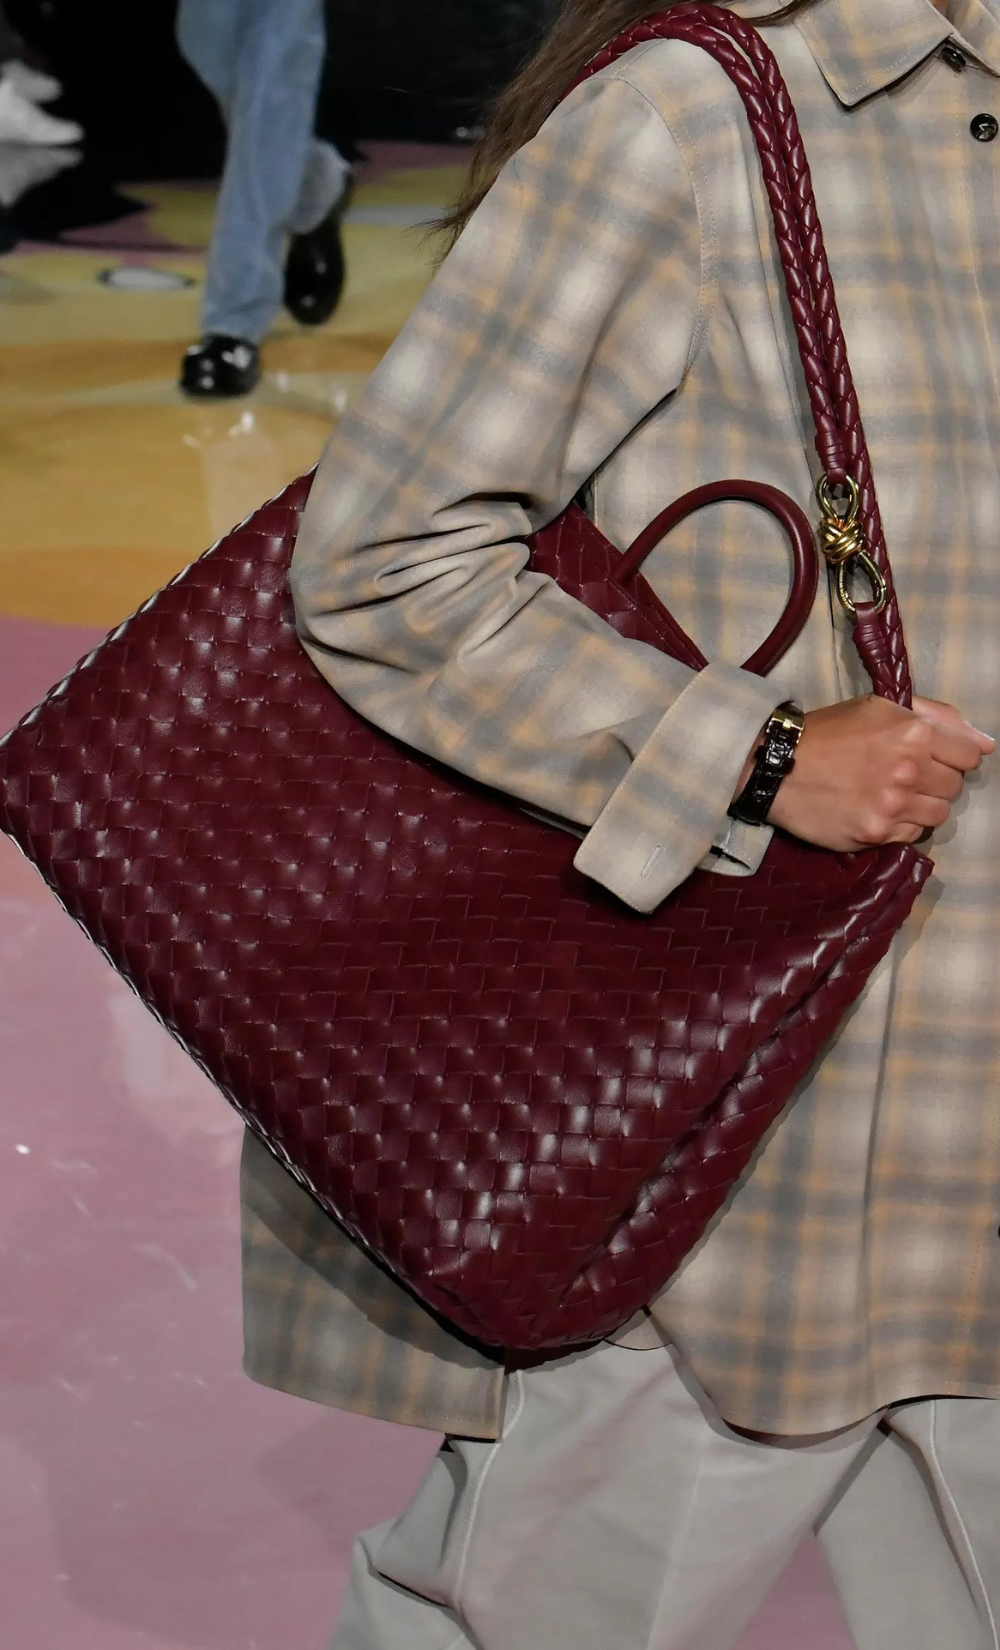 Bottega Veneta's Sardine Bag Is Becoming a Celebrity Go-To